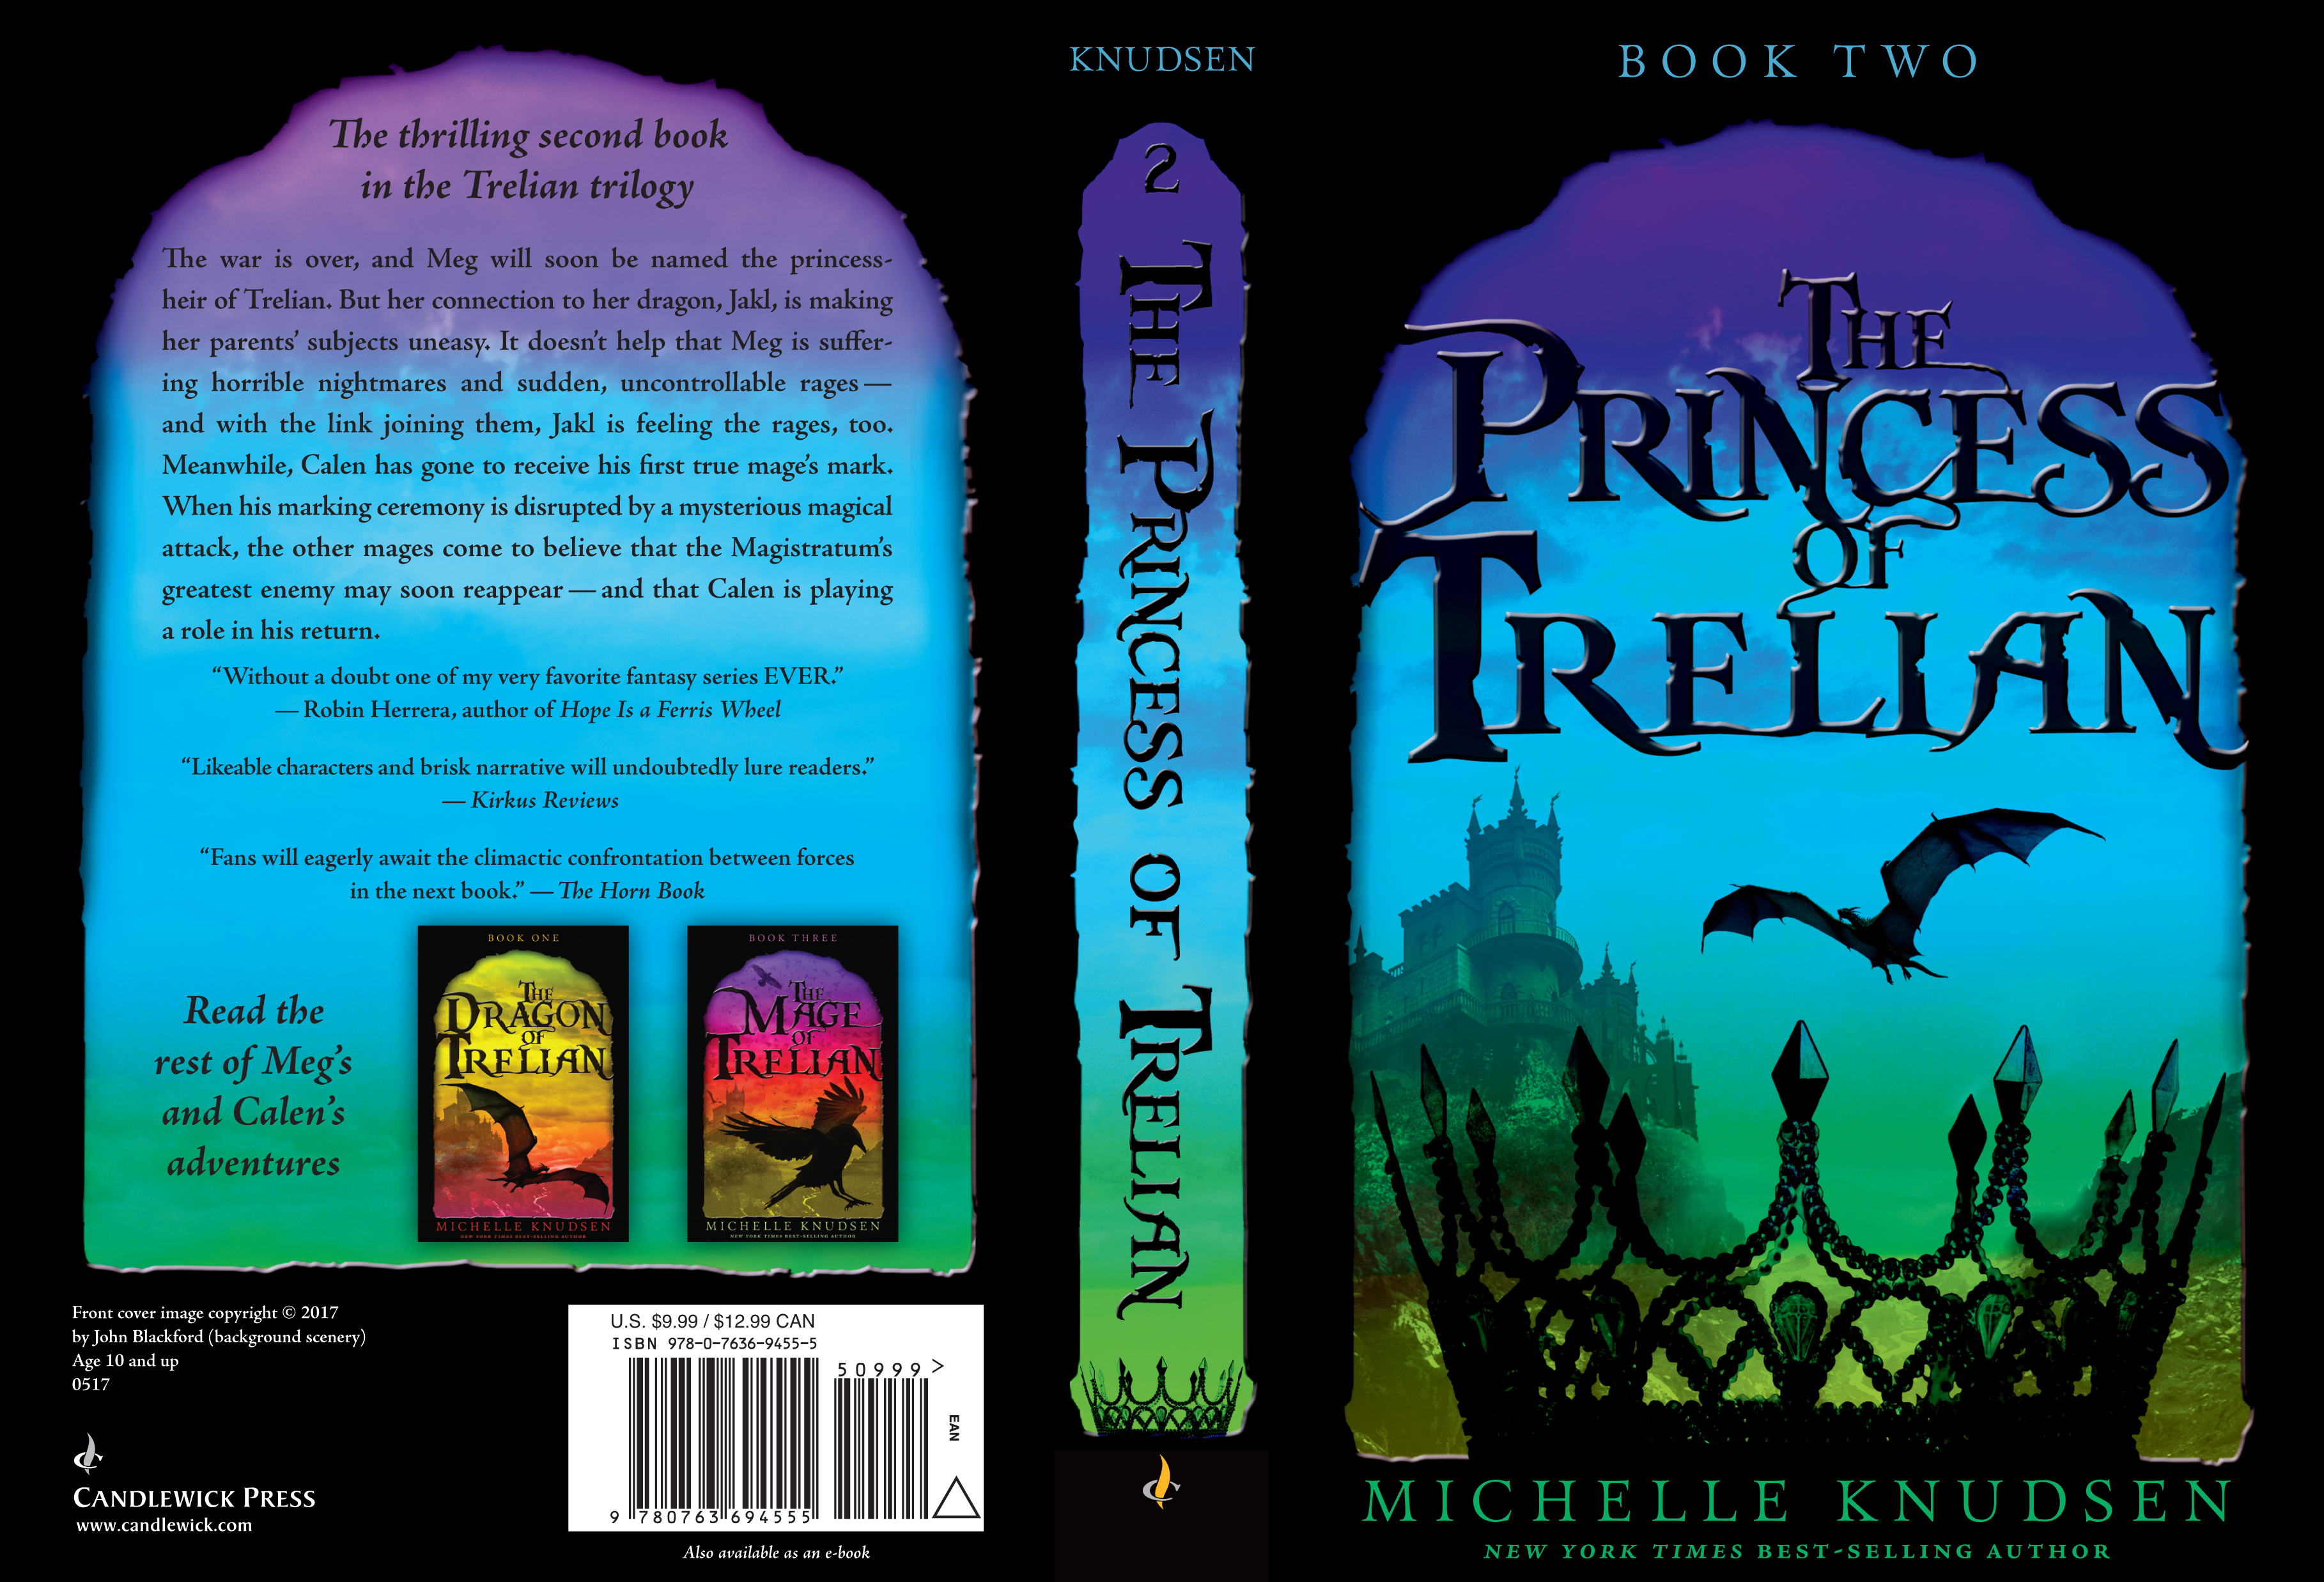 Paperback cover for THE PRINCESS OF TRELIAN